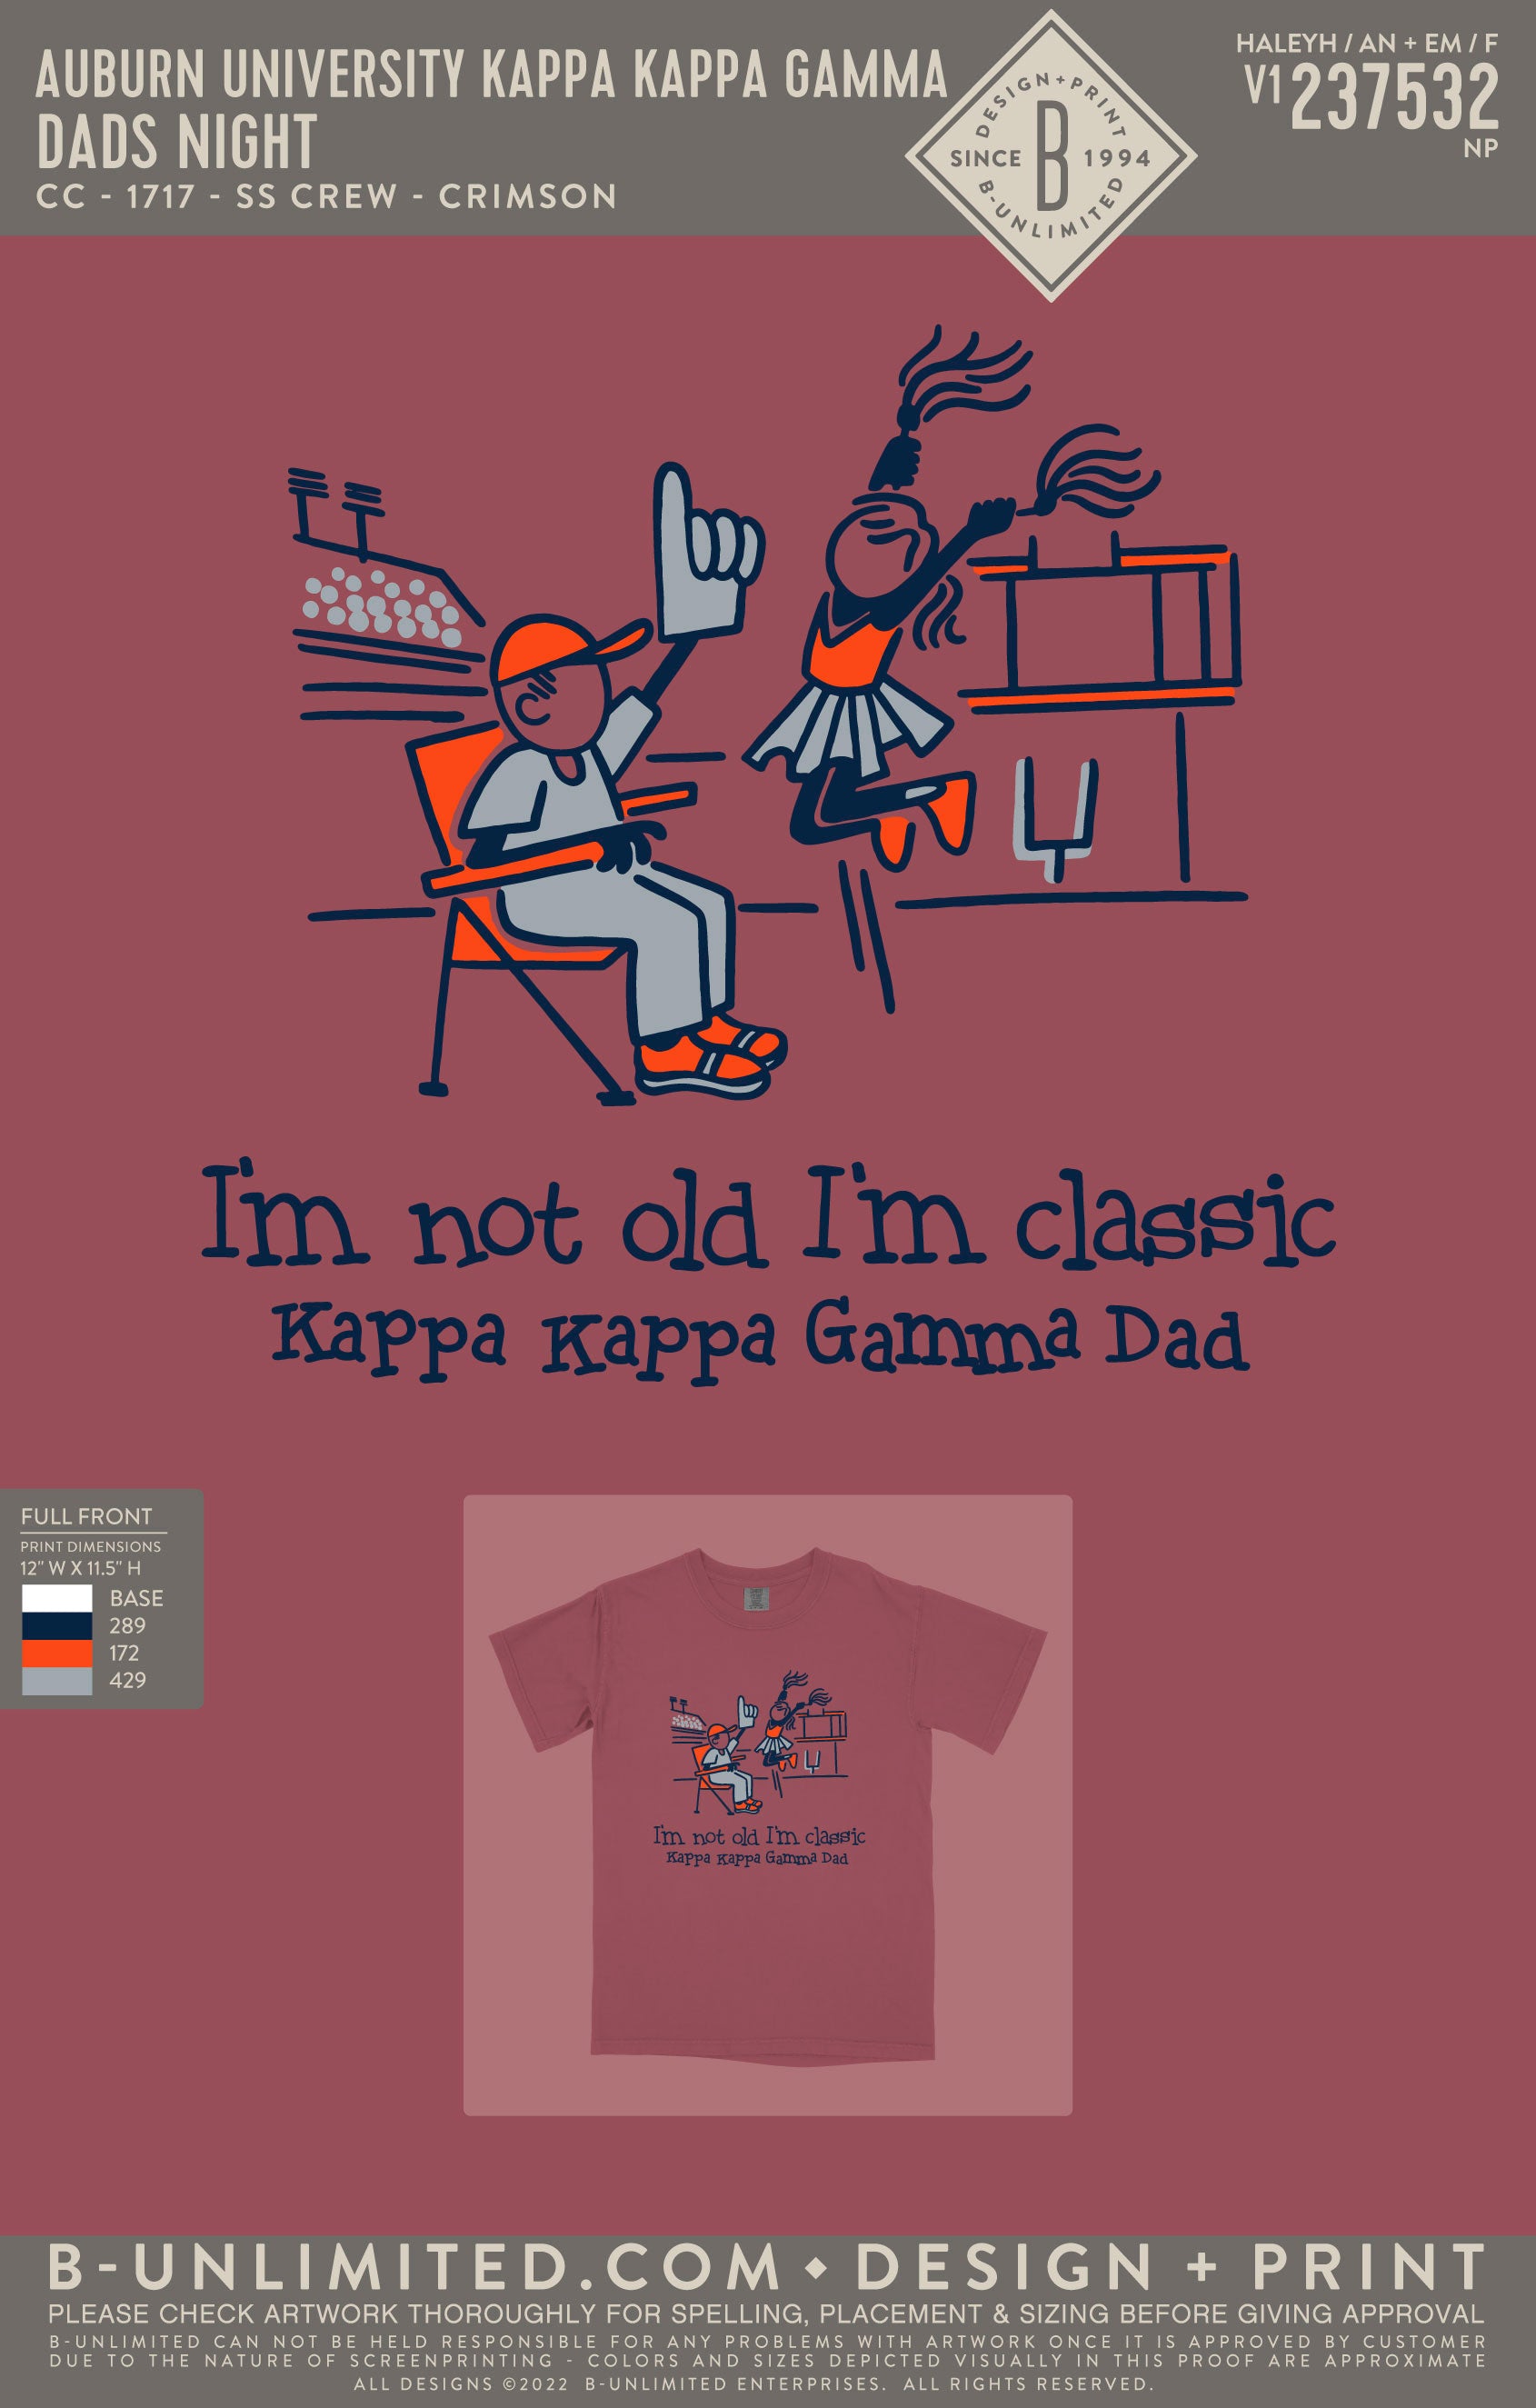 Auburn University Kappa Kappa Gamma - Dads Night - CC - 1717 - SS Crew - Crimson